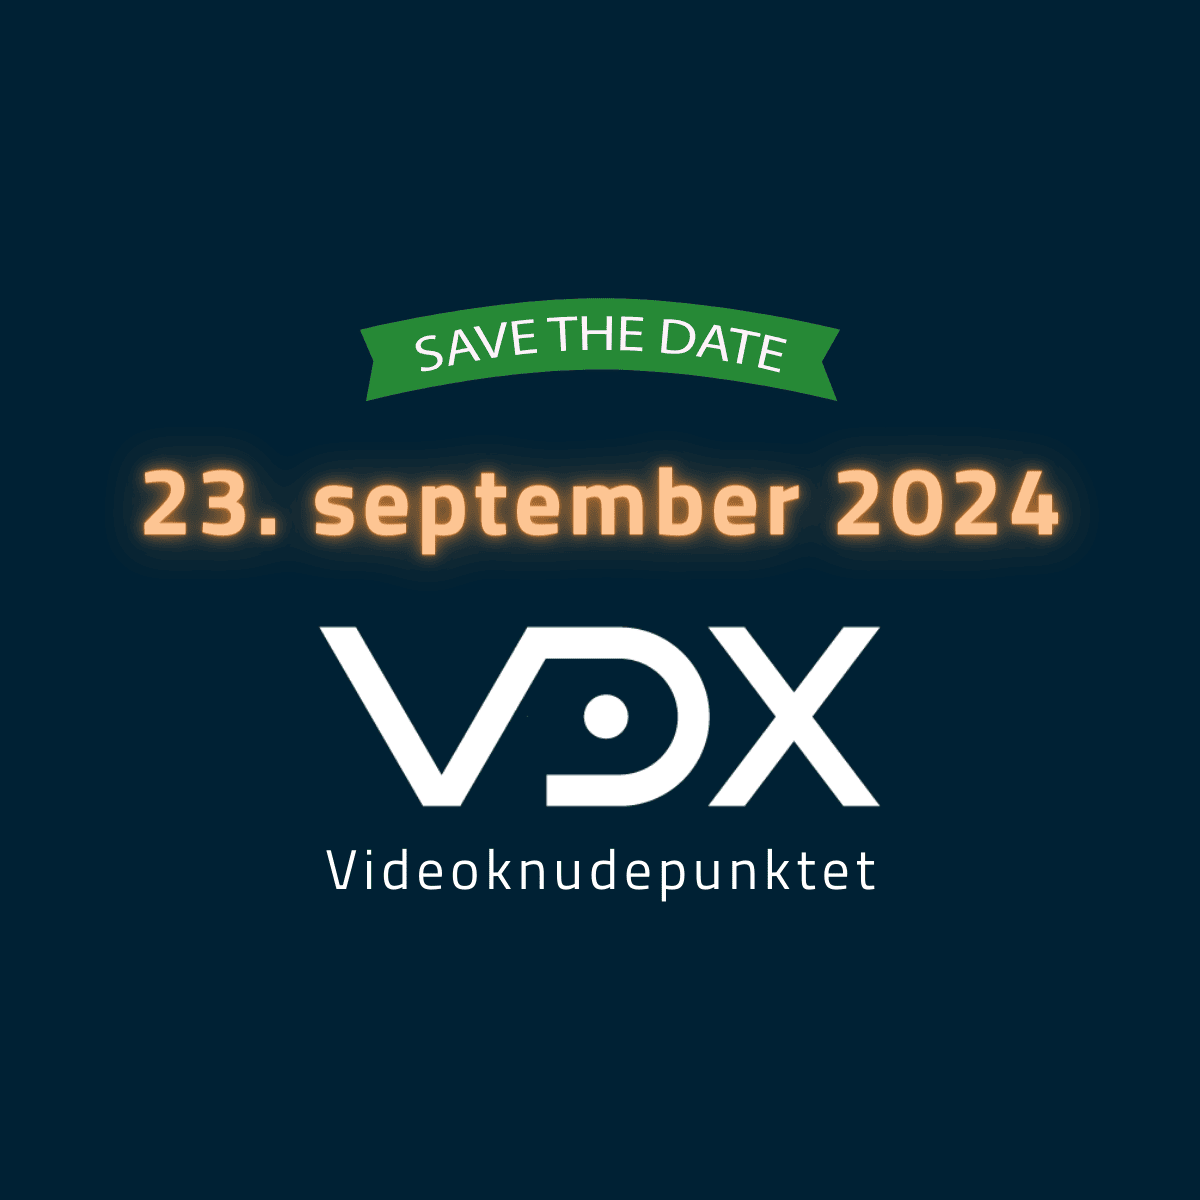 Tekst: "Save the date - 23. september 2024", herunder VDX-logo og tekst "Videoknudepunktet"